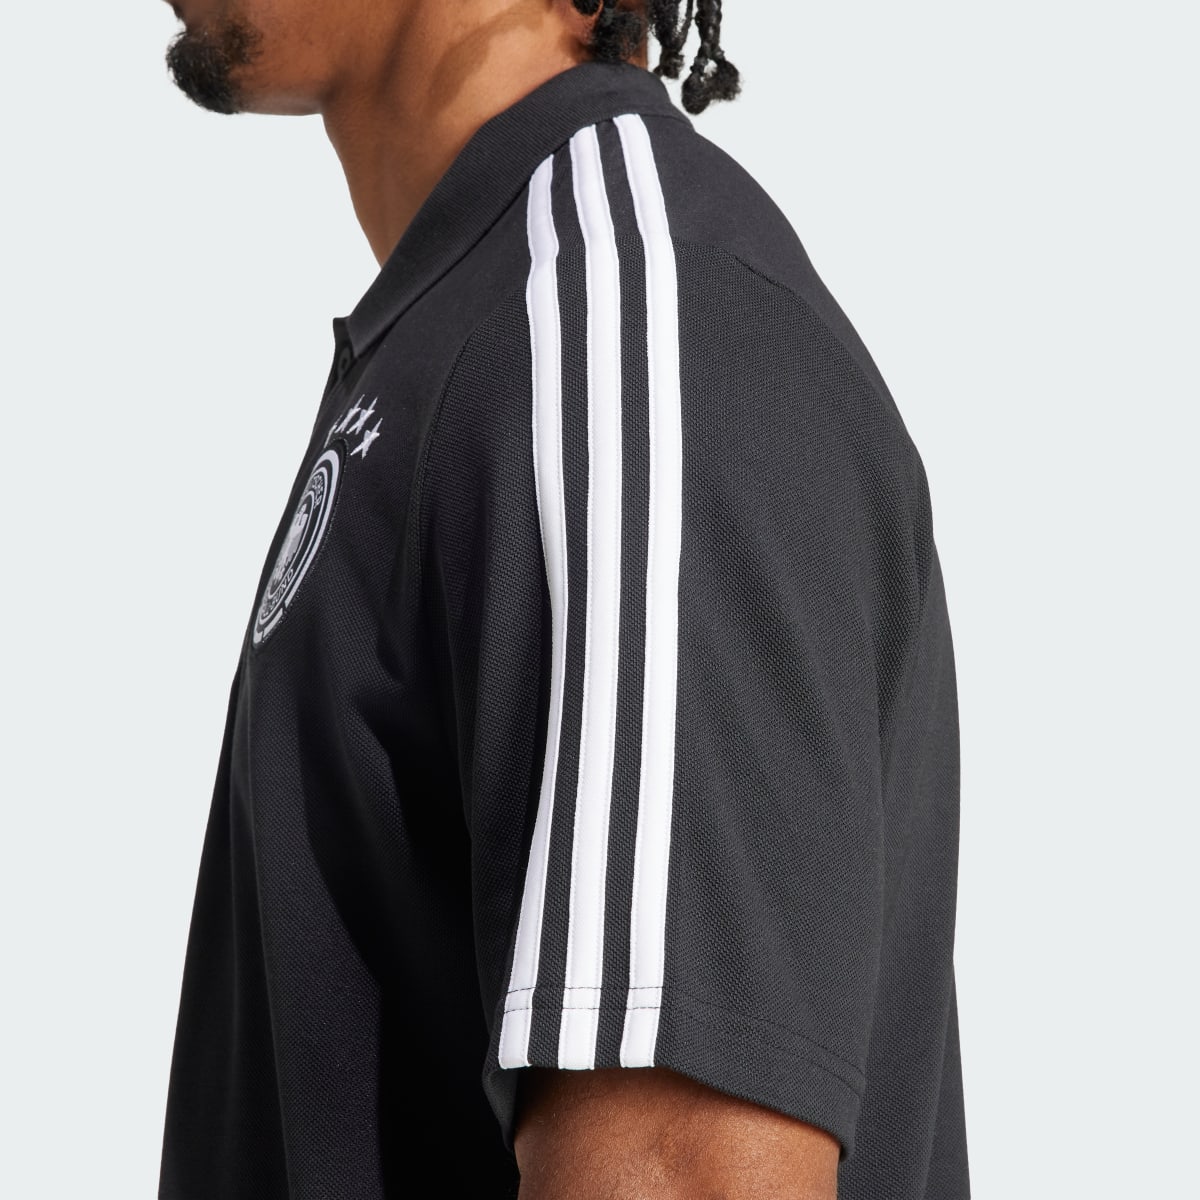 Adidas Germany DNA 3-Stripes Polo Shirt. 8